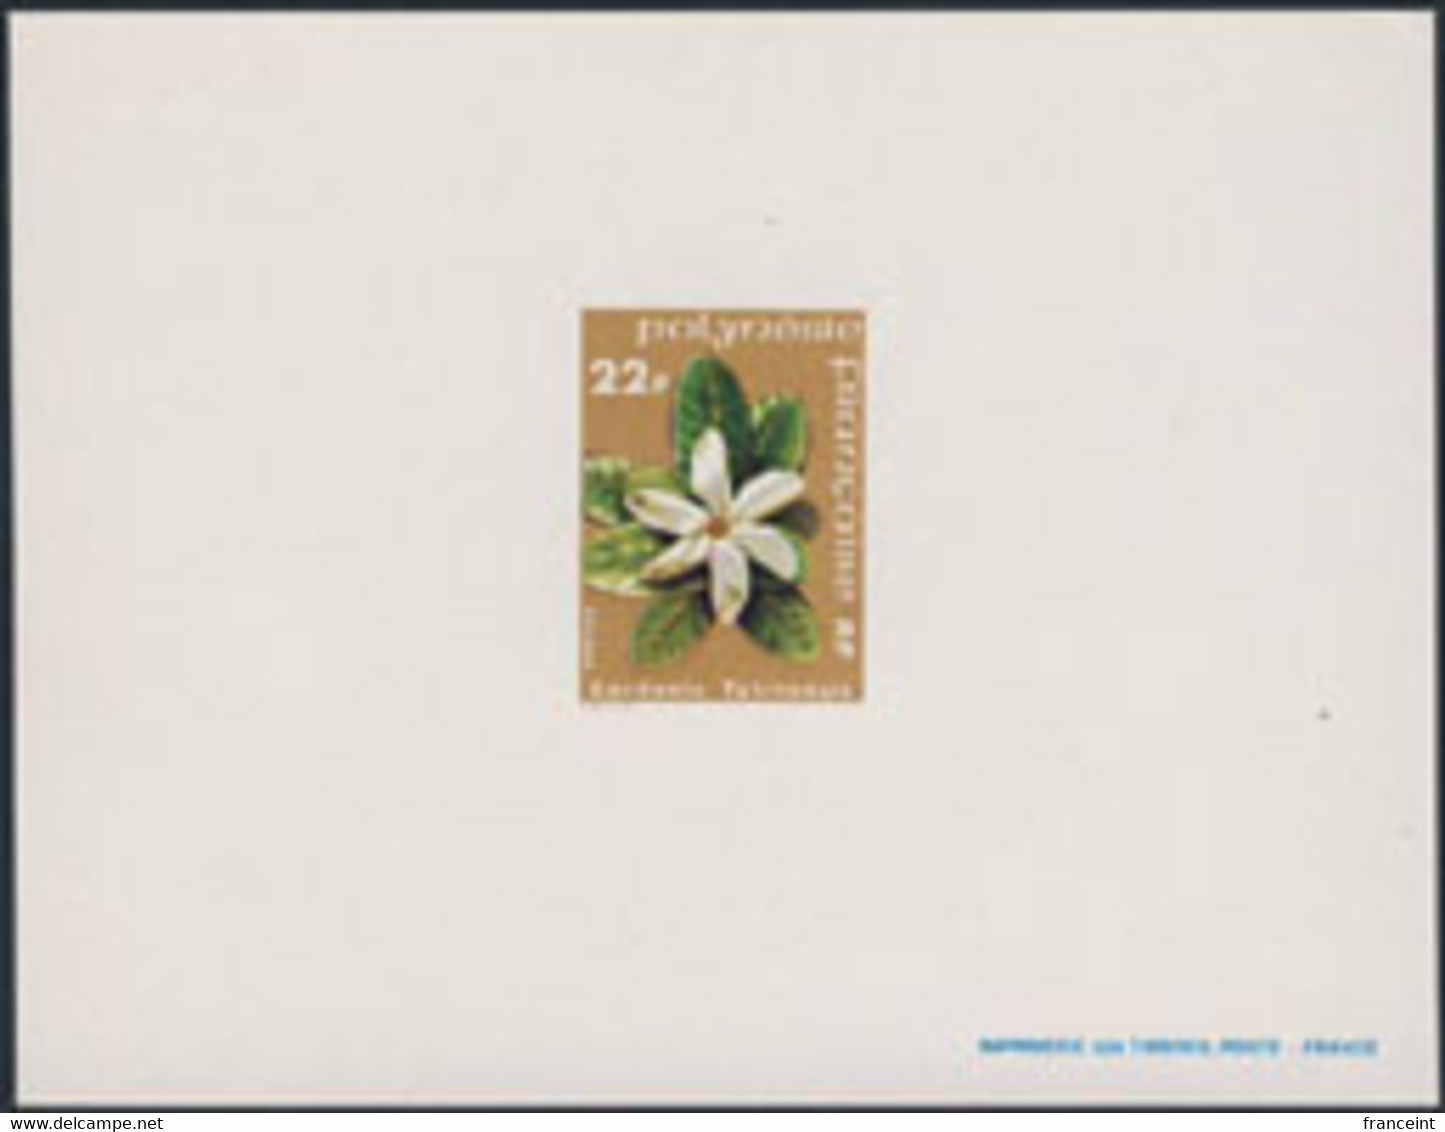 FRENCH POLYNESIA (1979) Tahitian Gardenia. Deluxe Sheet. Scott No 303, Yvert No 129. - Sin Dentar, Pruebas De Impresión Y Variedades